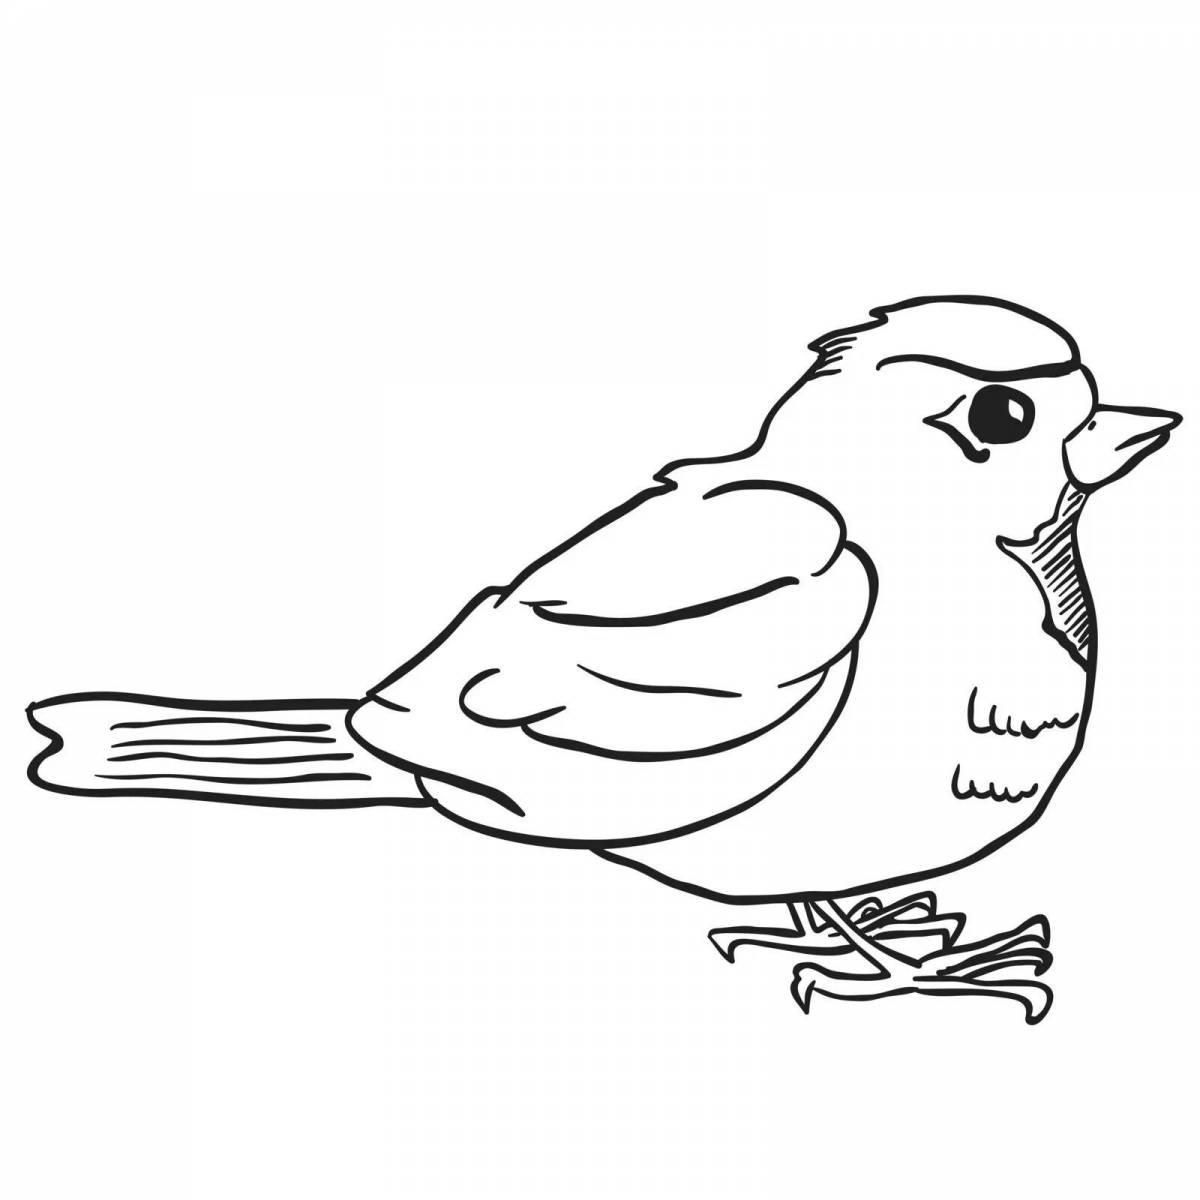 Disheveled sparrow pattern #2